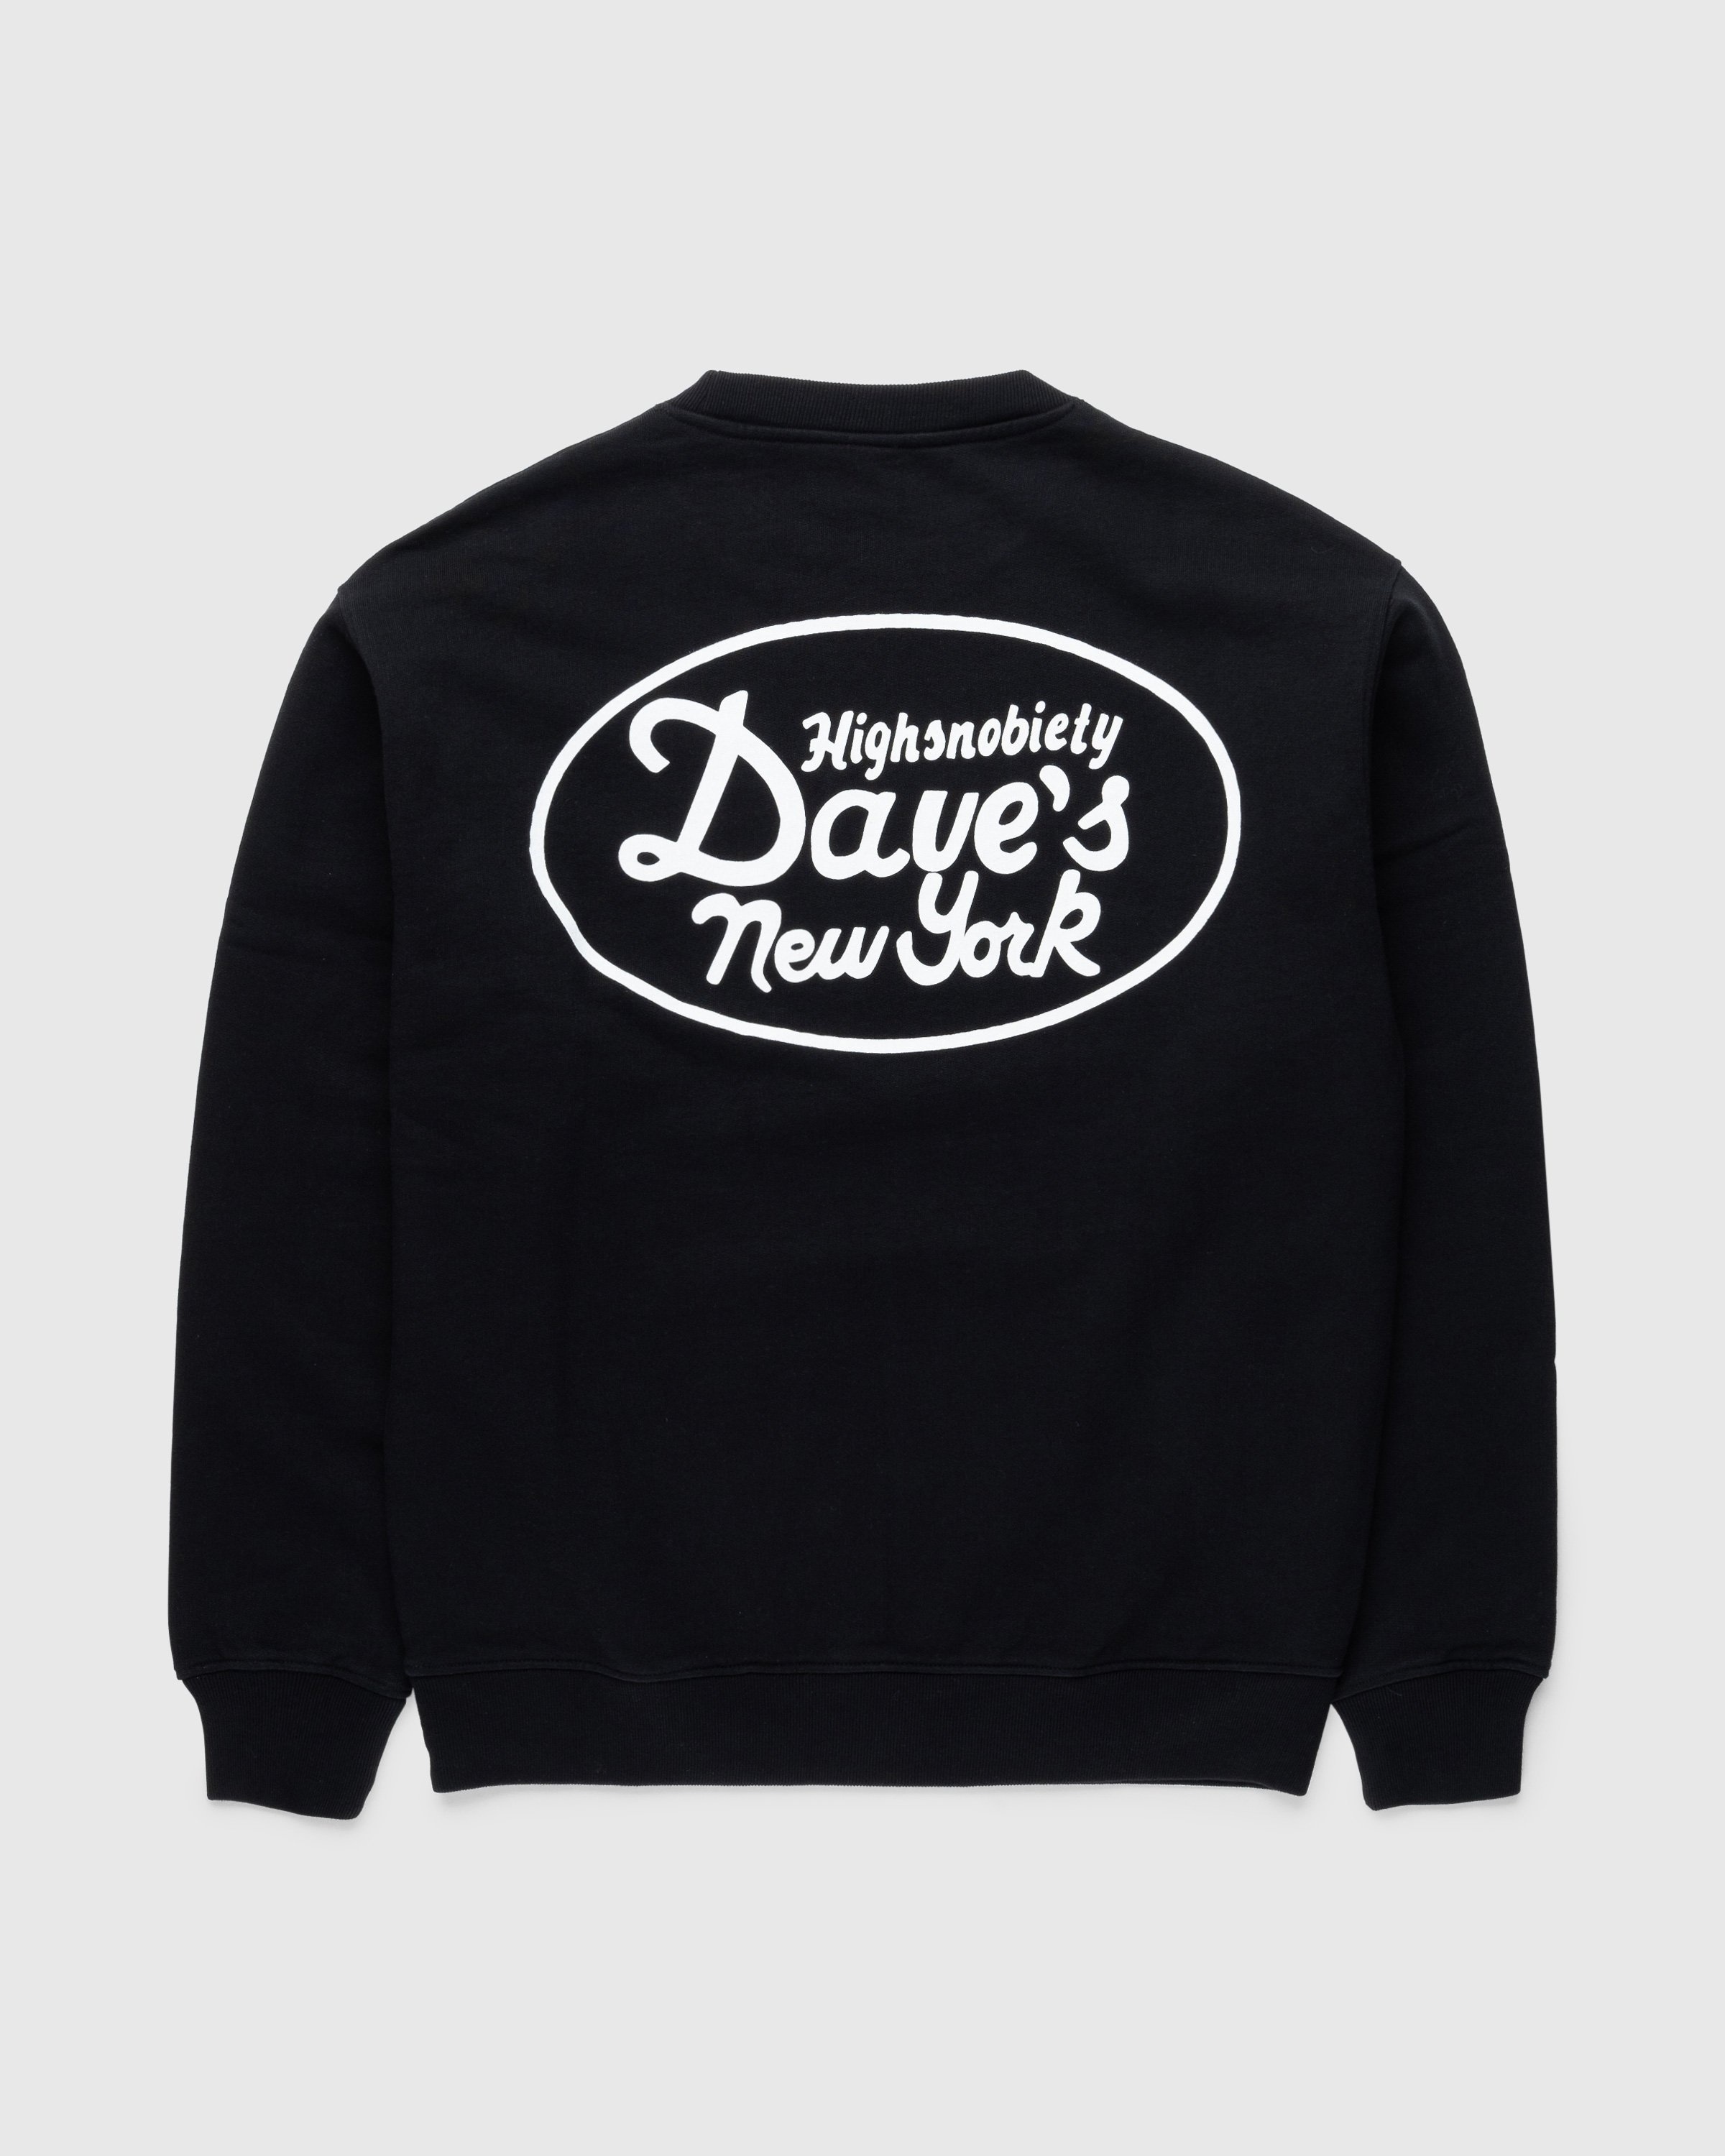 Dave's New York x Highsnobiety – Crewneck Black  - Sweats - Black - Image 1